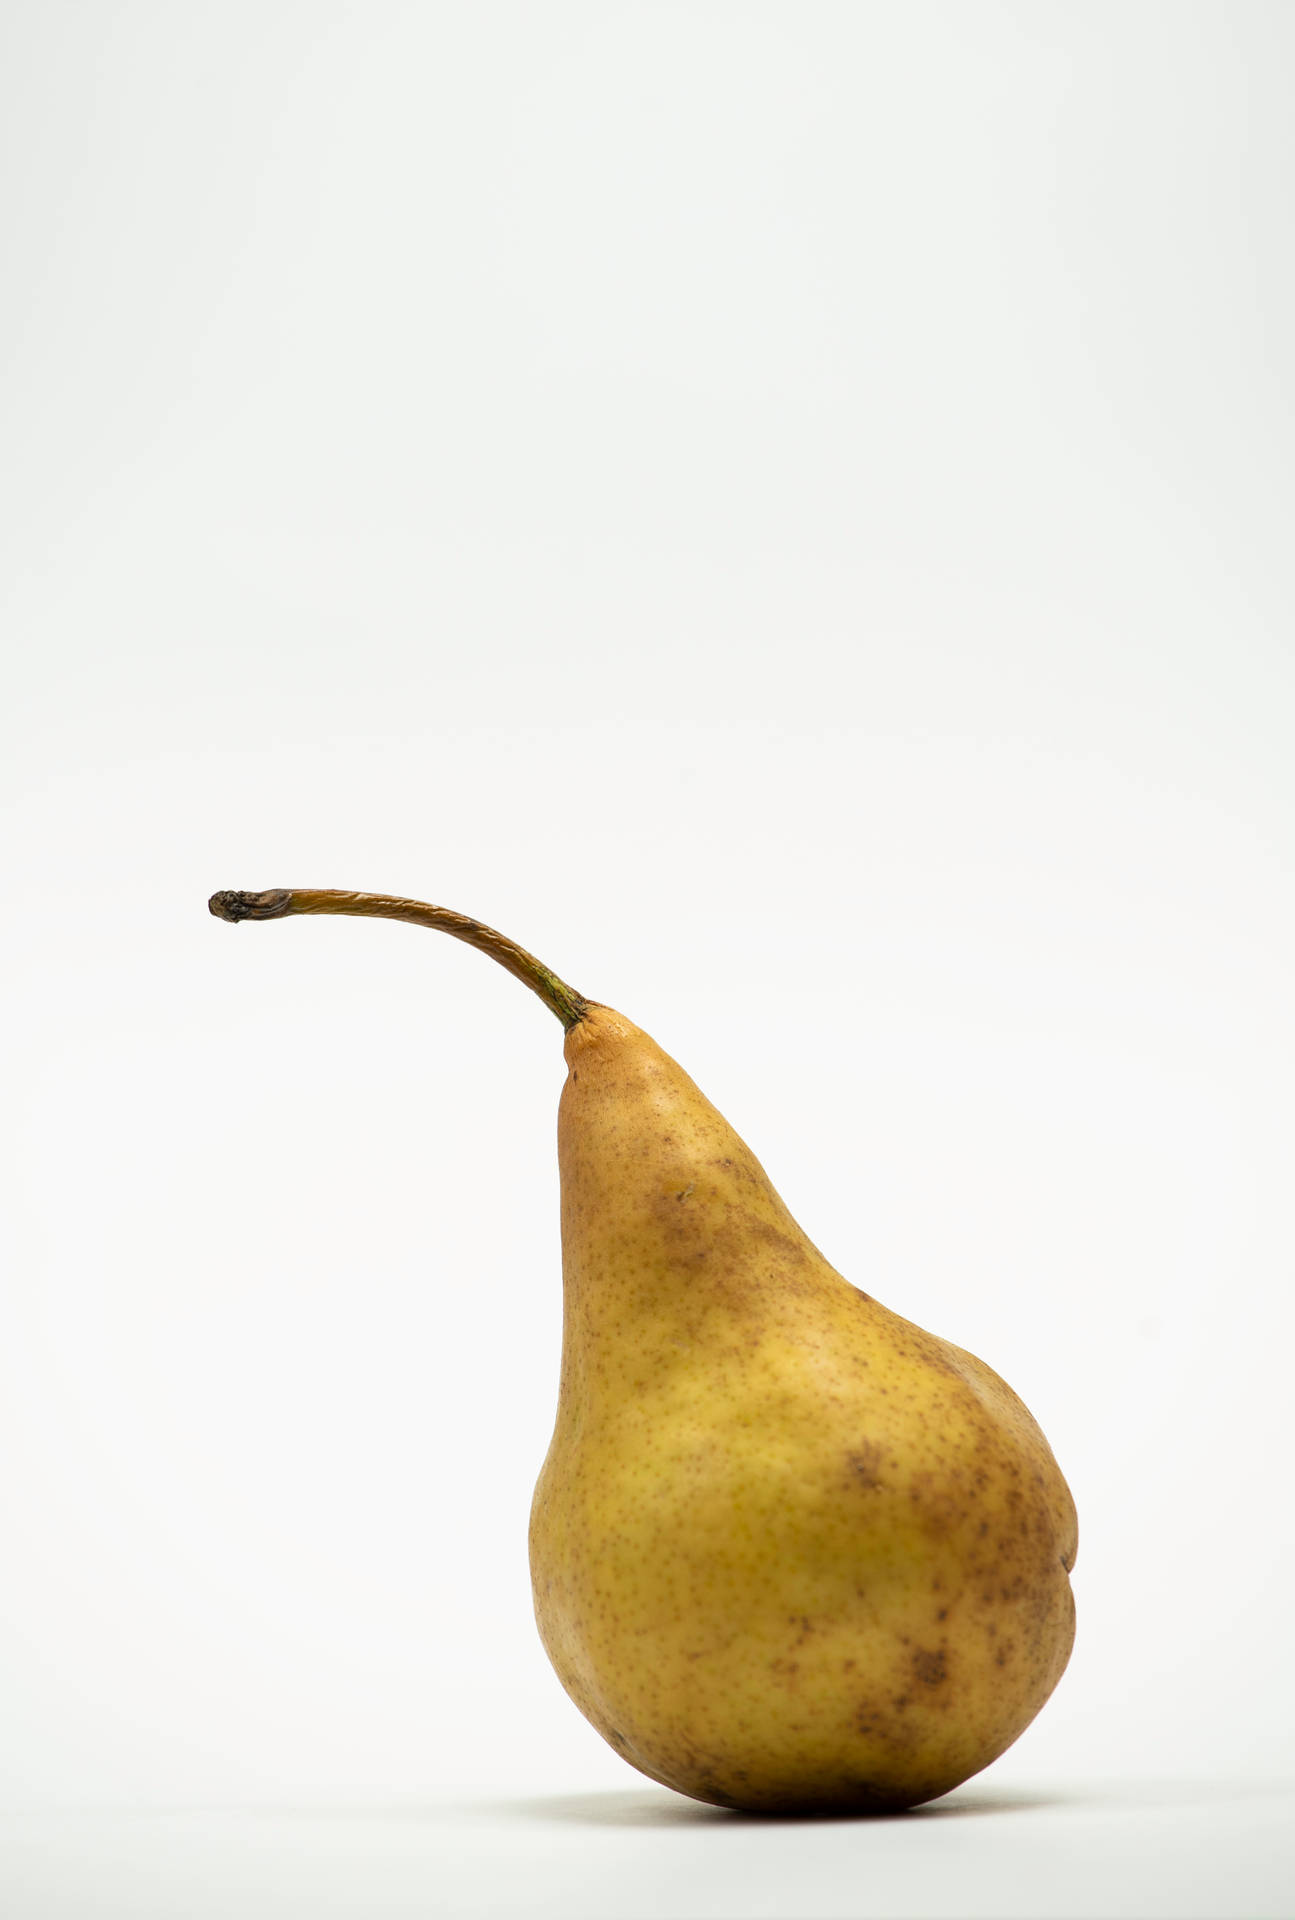 Pear Fruit Minimalist Photograph Background